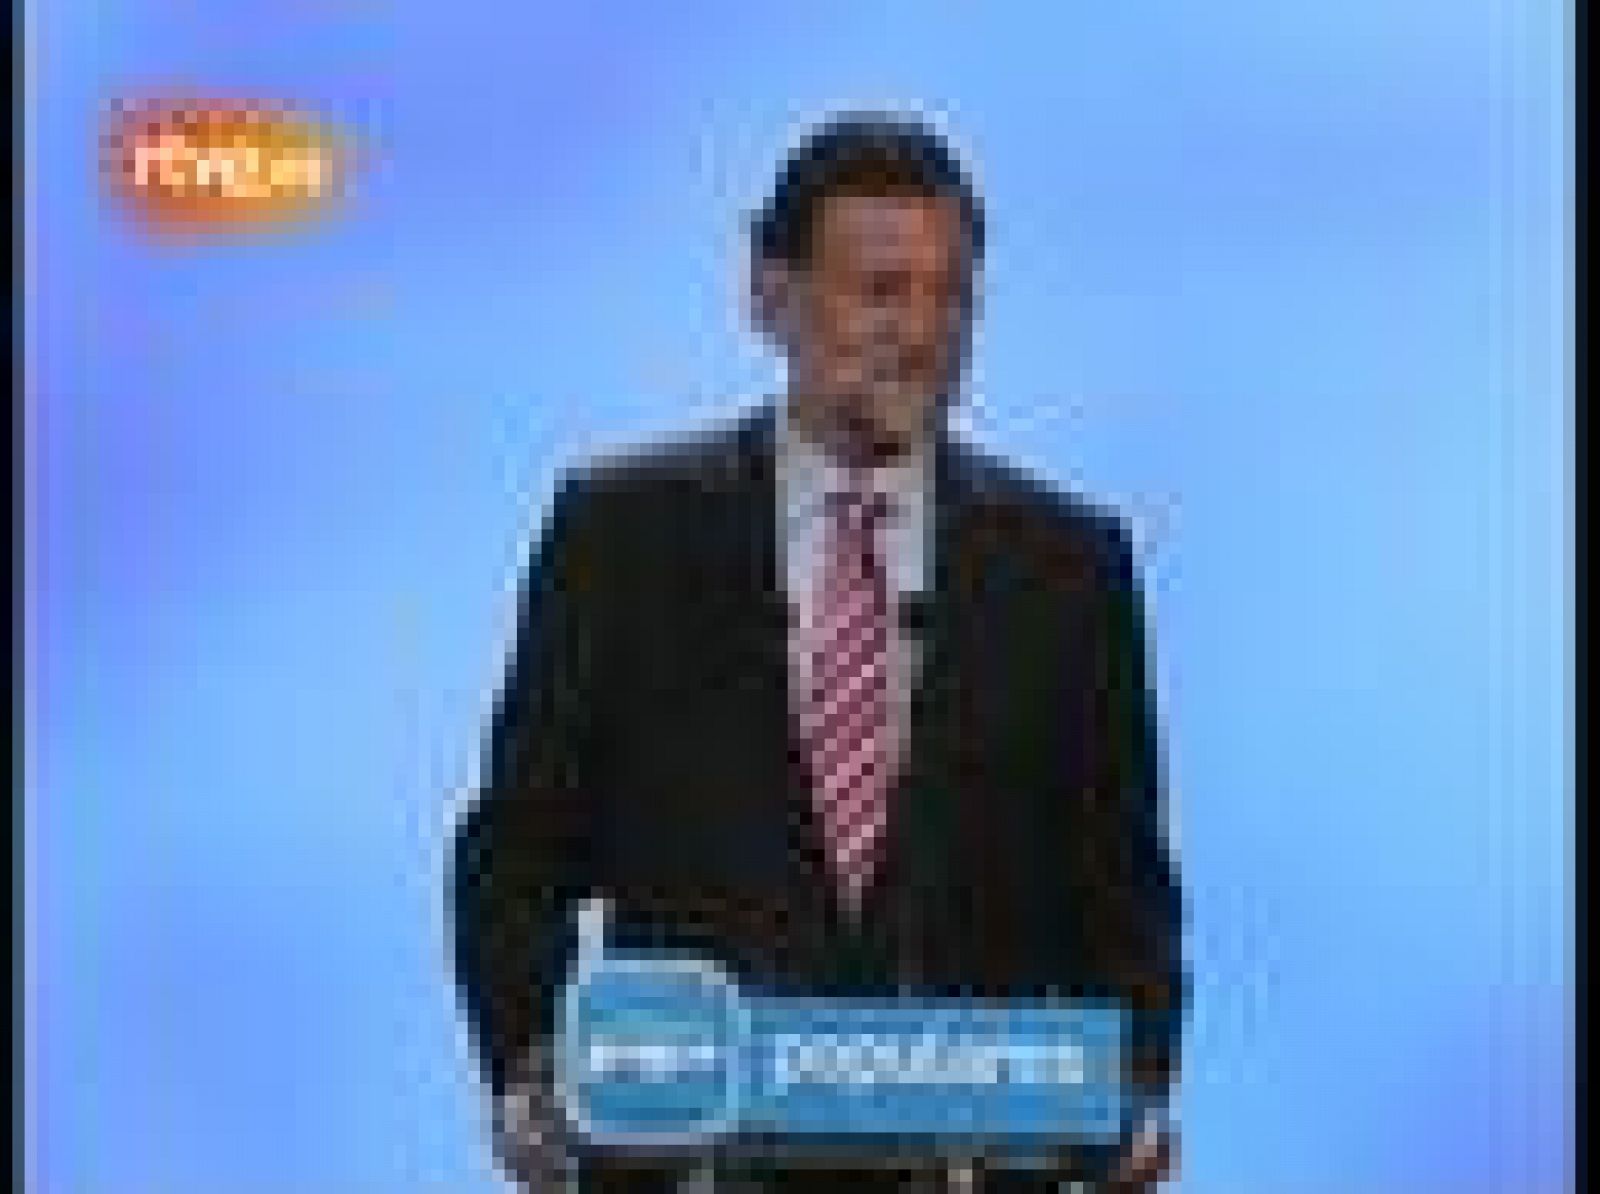 Sin programa: Comparecencia íntegra de Rajoy | RTVE Play